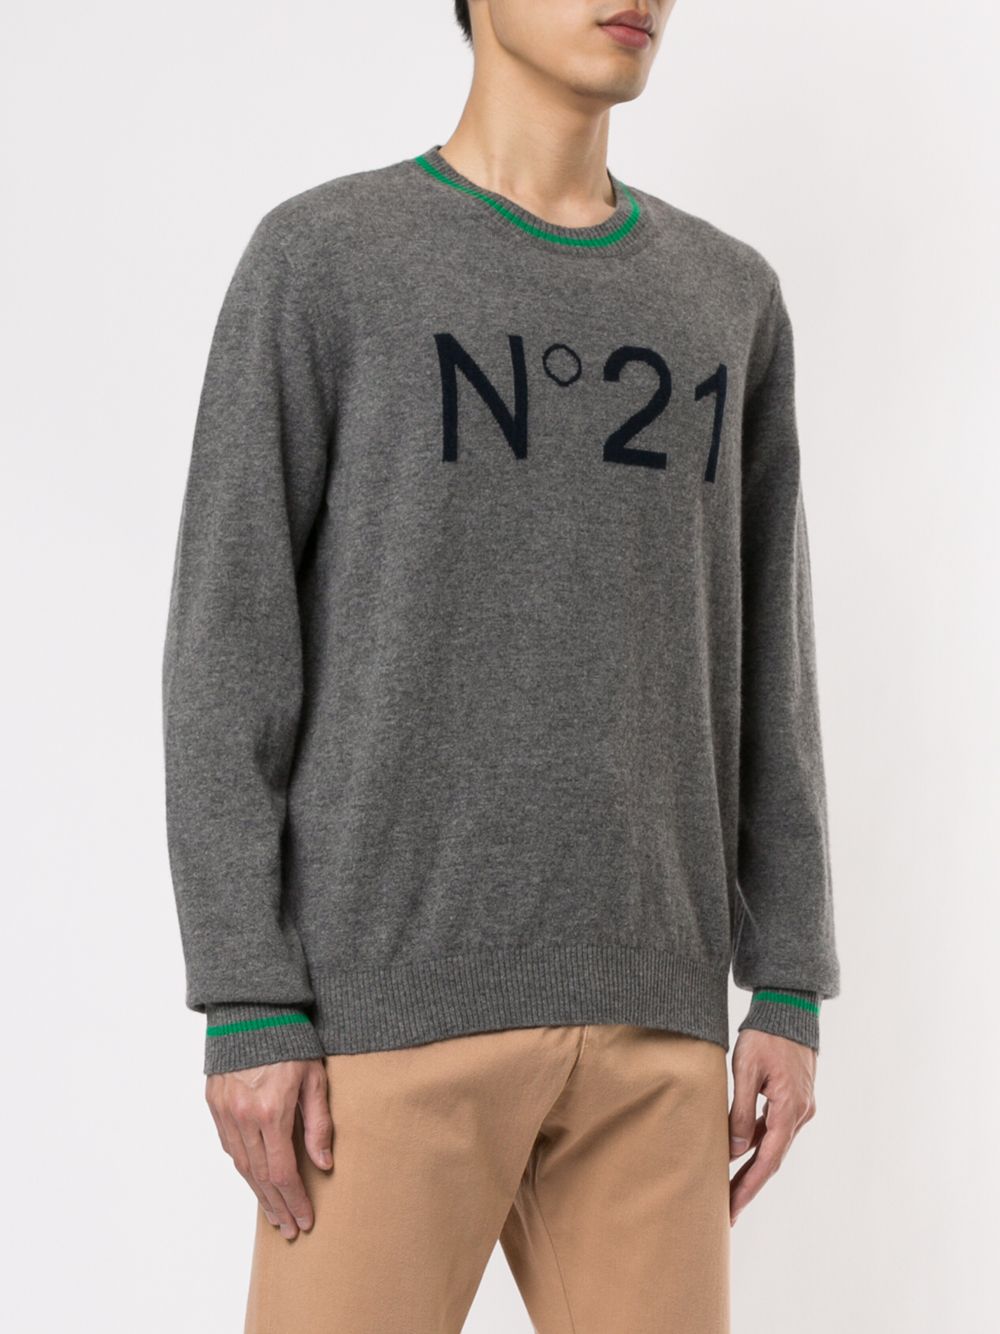 фото Nº21 свитер жаккардовой вязки с логотипом